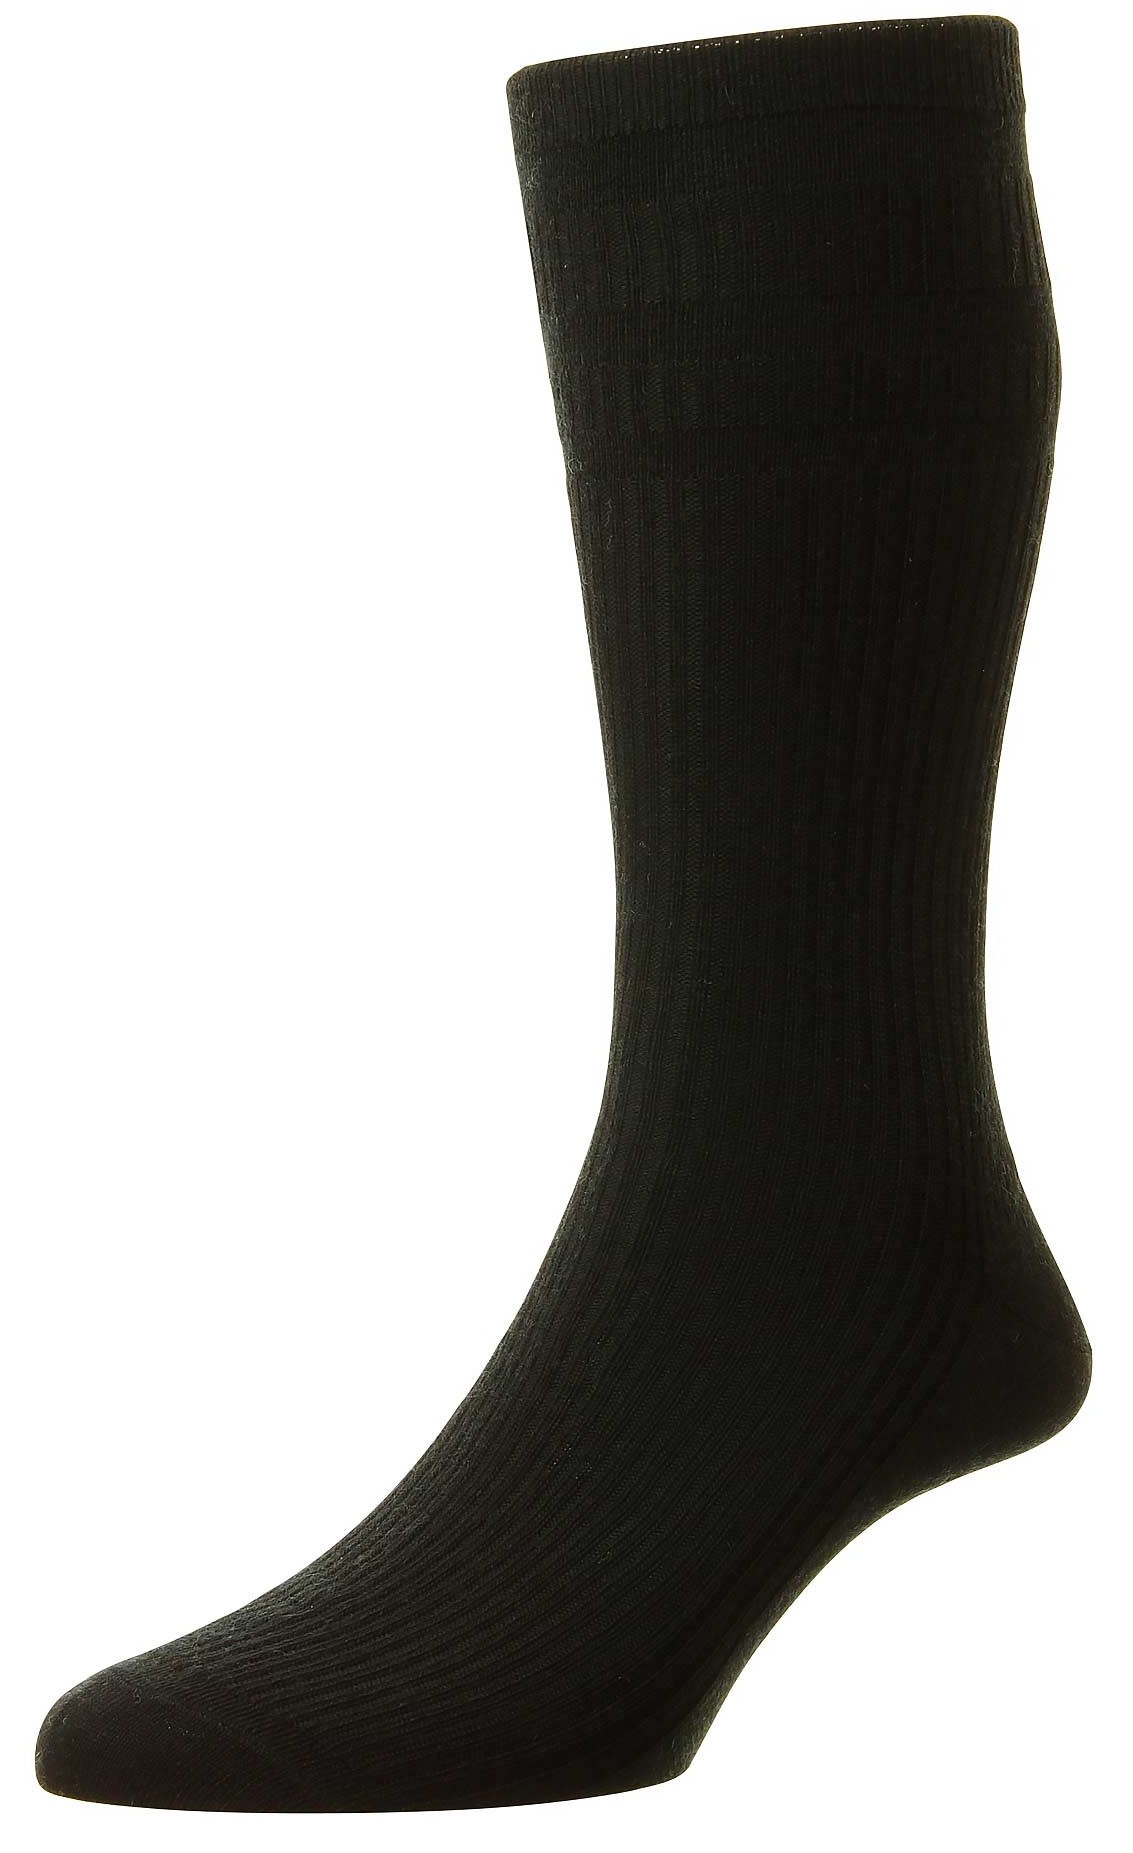 HJ90 Softop Socks BLack Size 6-11